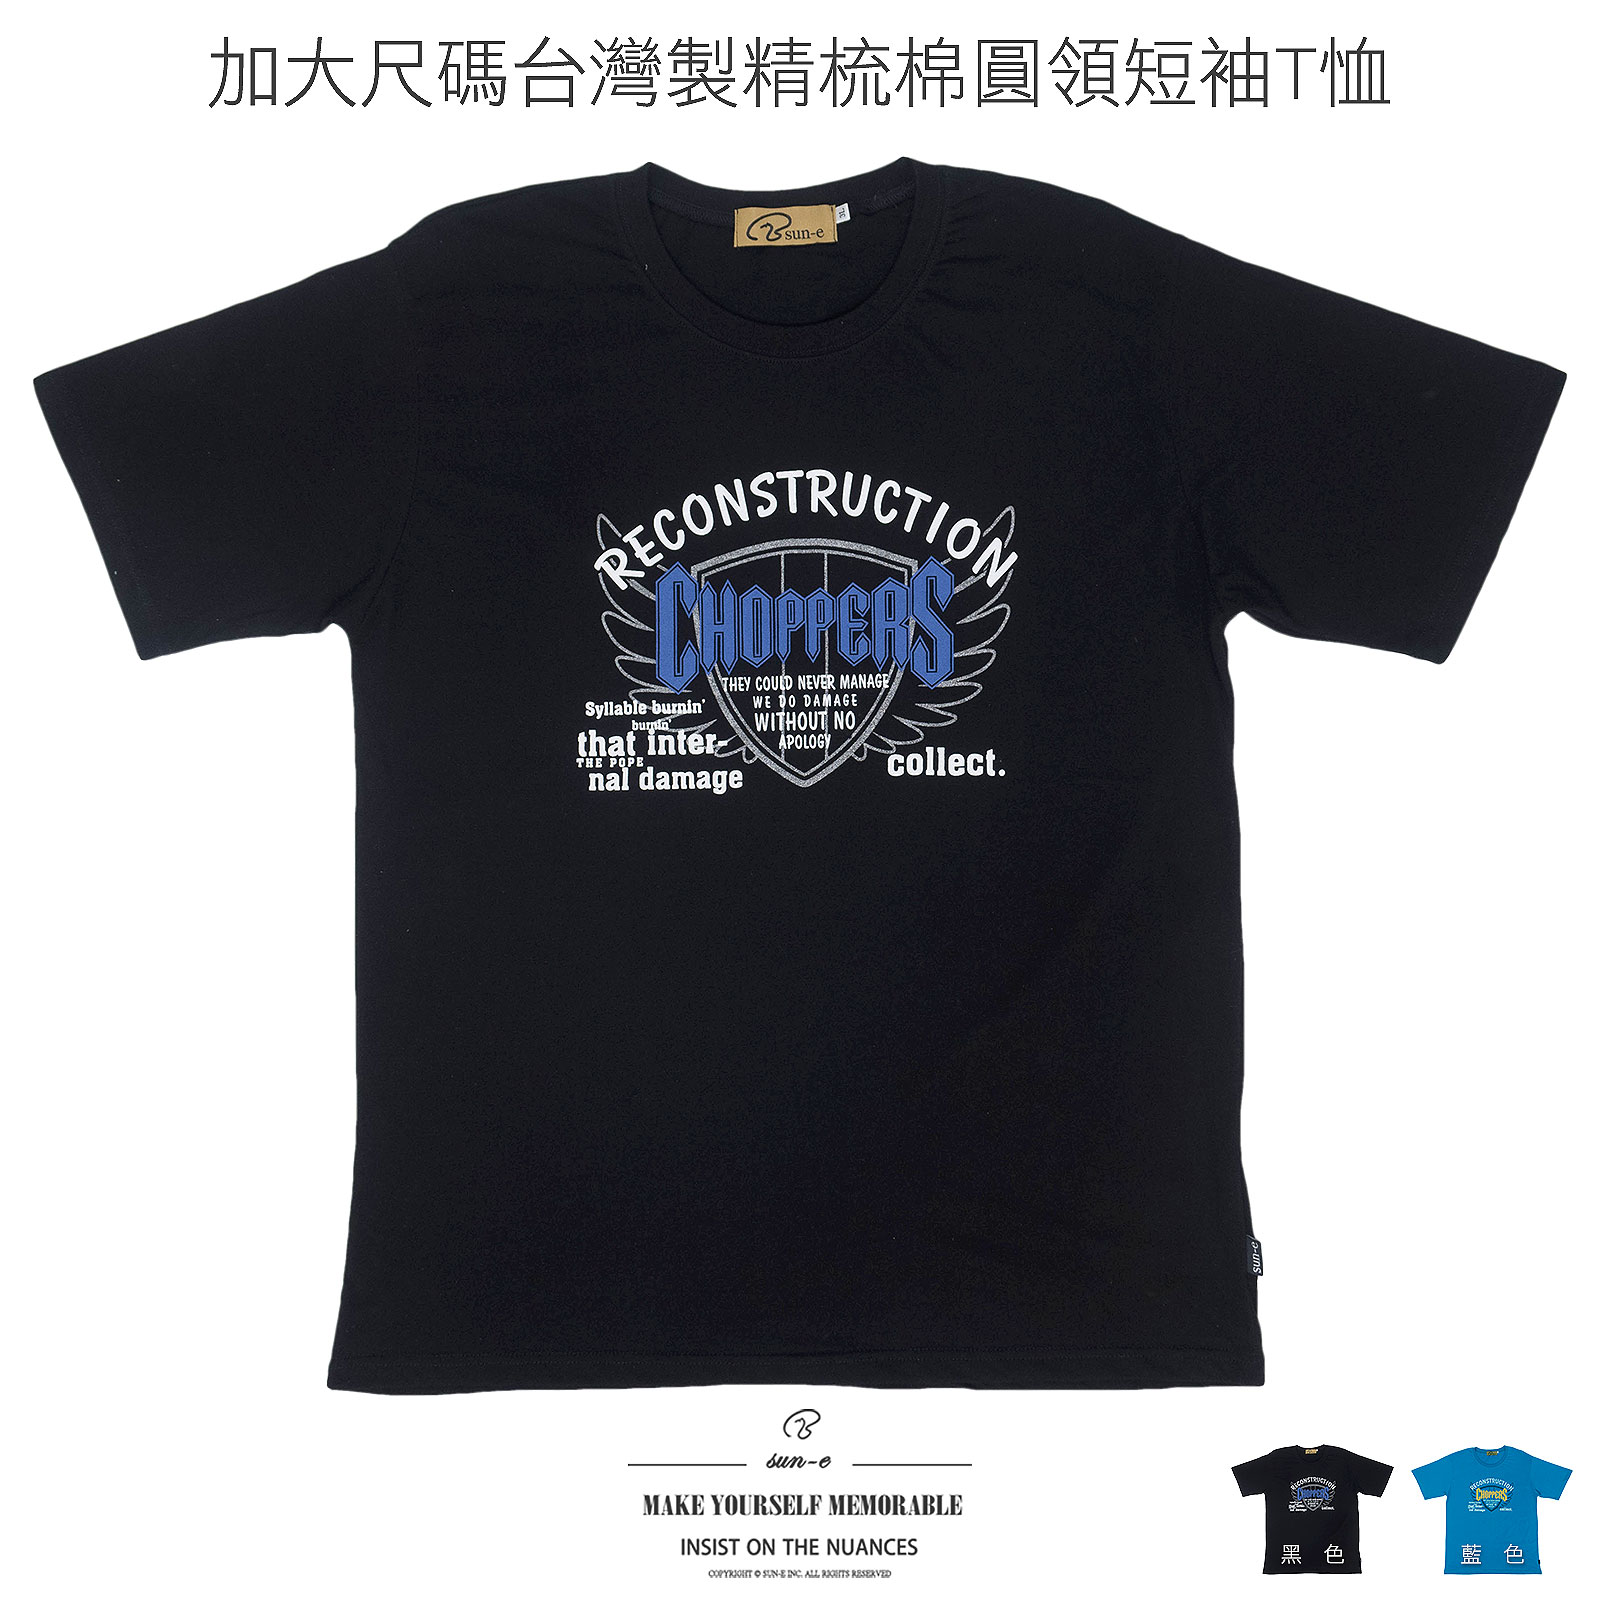 ［零碼促銷］加大尺碼T恤 台灣製T恤 精梳棉T恤 短袖T恤 英文字短Tee 圓領T恤 大尺碼男裝 短袖上衣 Big And Tall T-shirt Made In Taiwan T-shirts Combed Cotton T-shirt Crewneck Short Sleeve T-shirt (310-2322-08)藍色、(310-2322-21)黑色 3L 5L (胸圍50~55英吋/127~140公分)男 [實體店面保障]sun-e